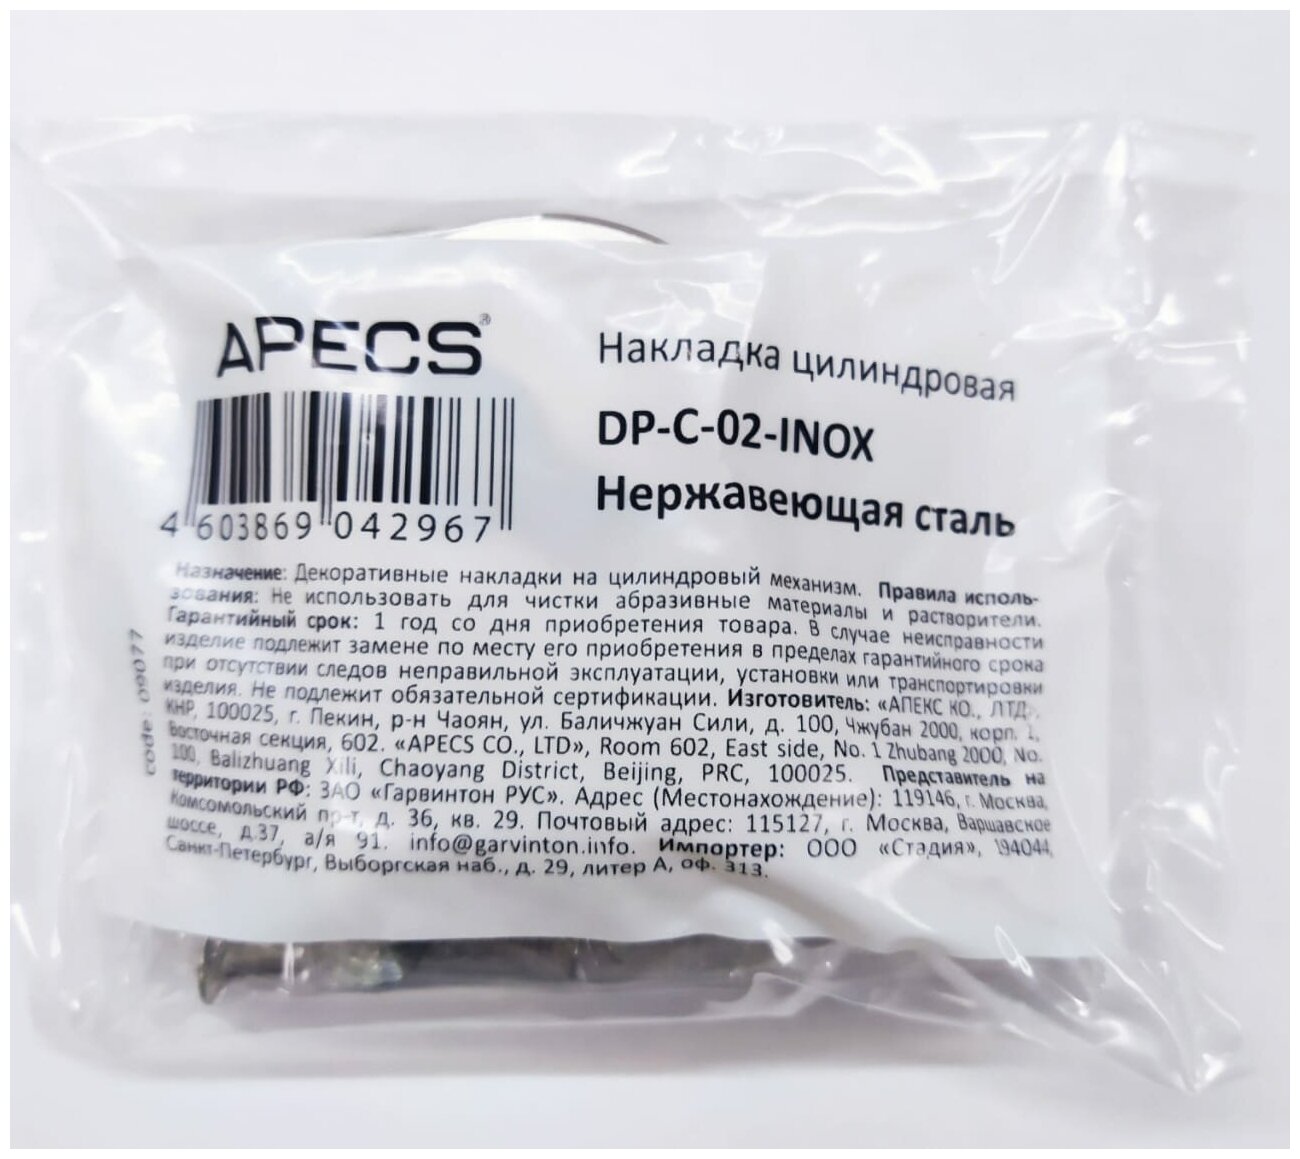 APECS Накладка цилиндровая DP-C-02-INOX PP-HR-05 9077 - фотография № 5